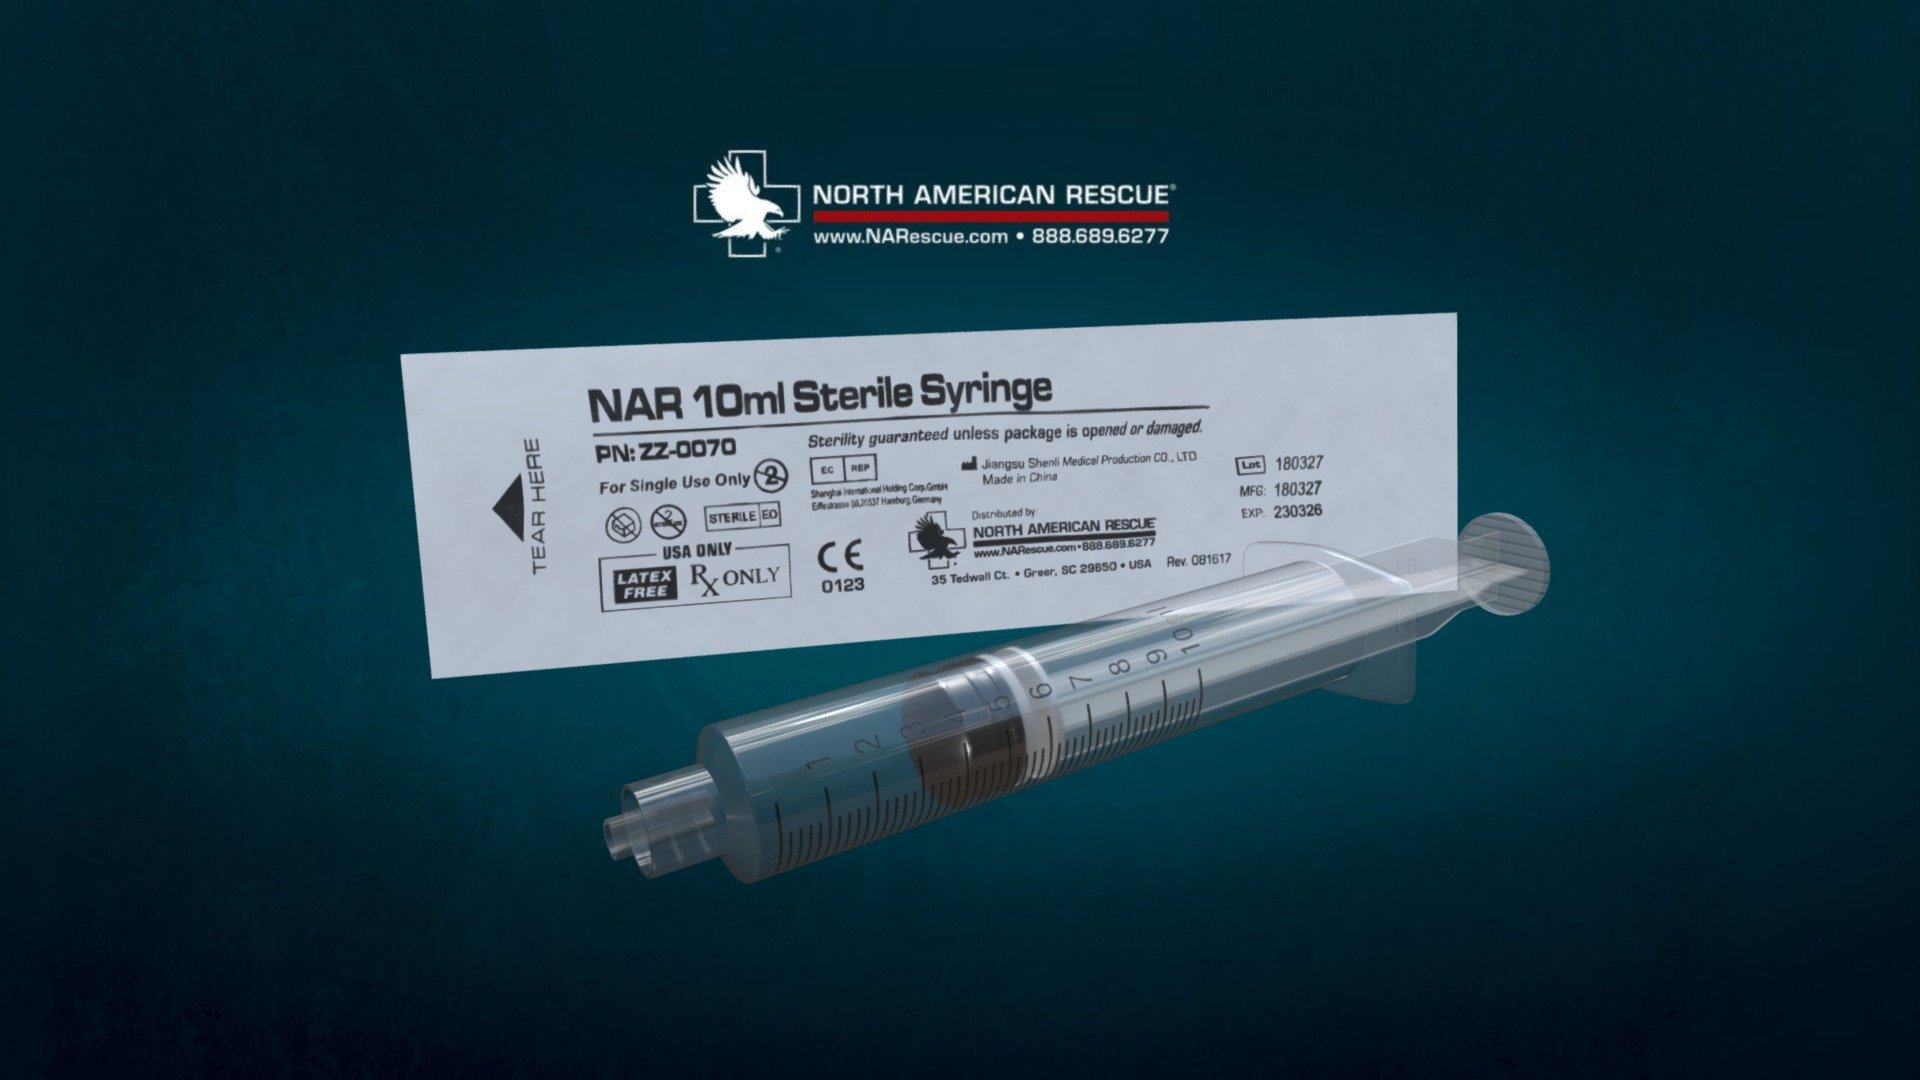 NAR 10ml Sterile Syringe